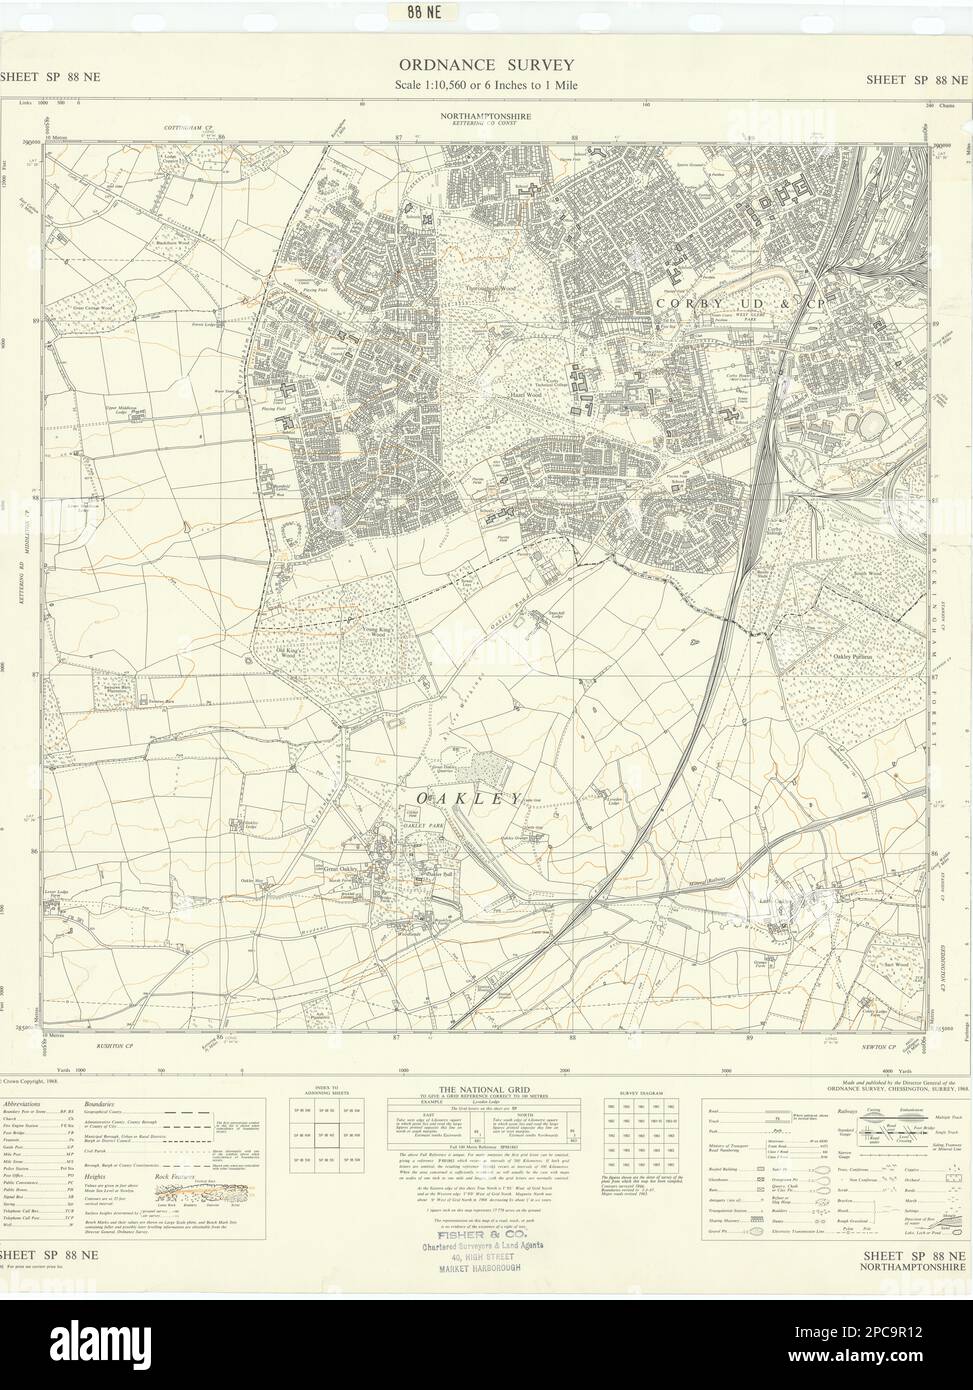 Ordnance Survey Sheet SP88NE Northamptonshire Corby Great Oakley 1968 mapa antiguo Foto de stock